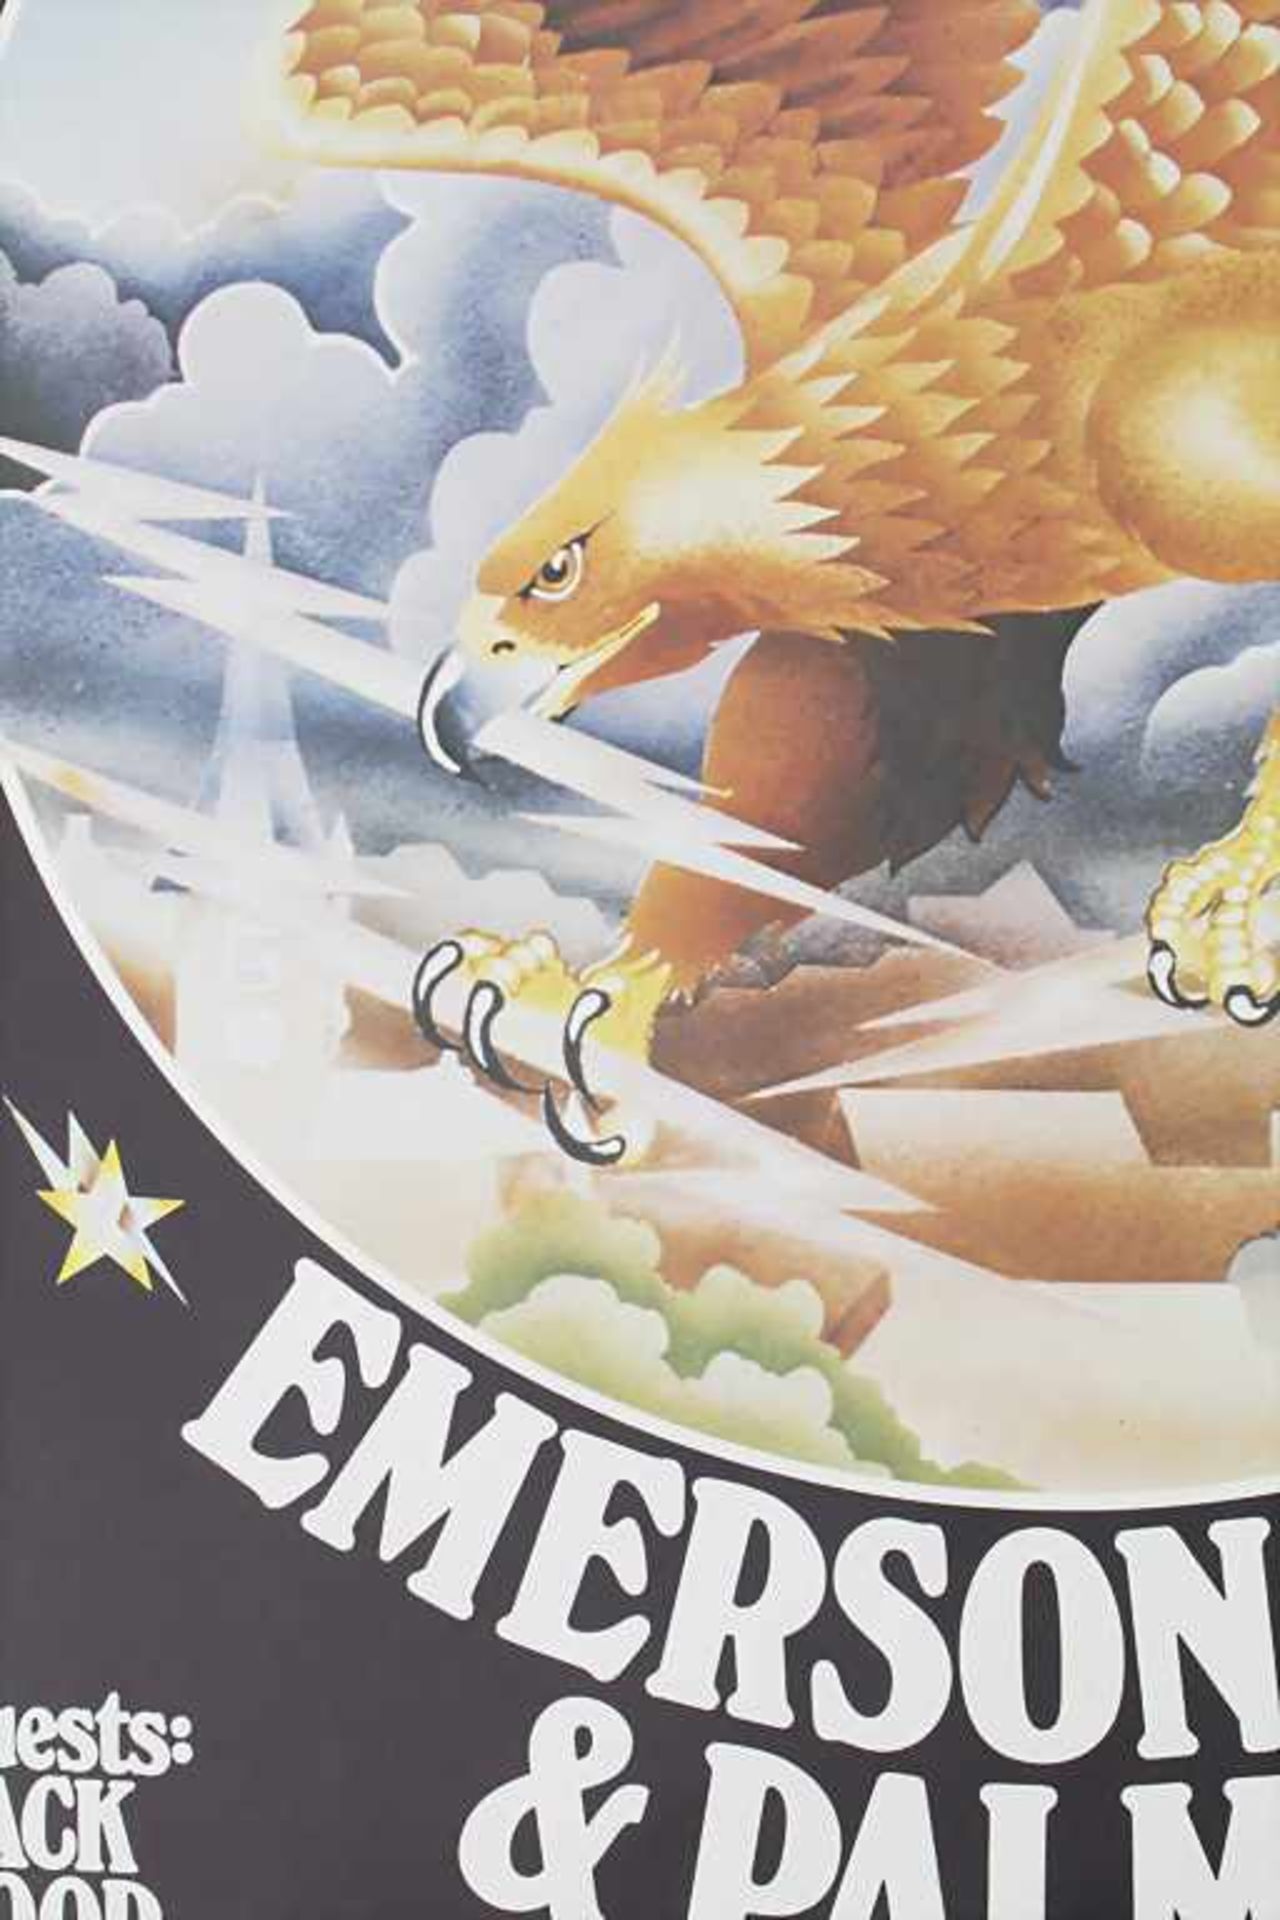 Konzertplakat 'Emerson Lake & Palmer' / A concert poster 'Emerson Lake & Palmer', Sindelfingen, - Image 3 of 3